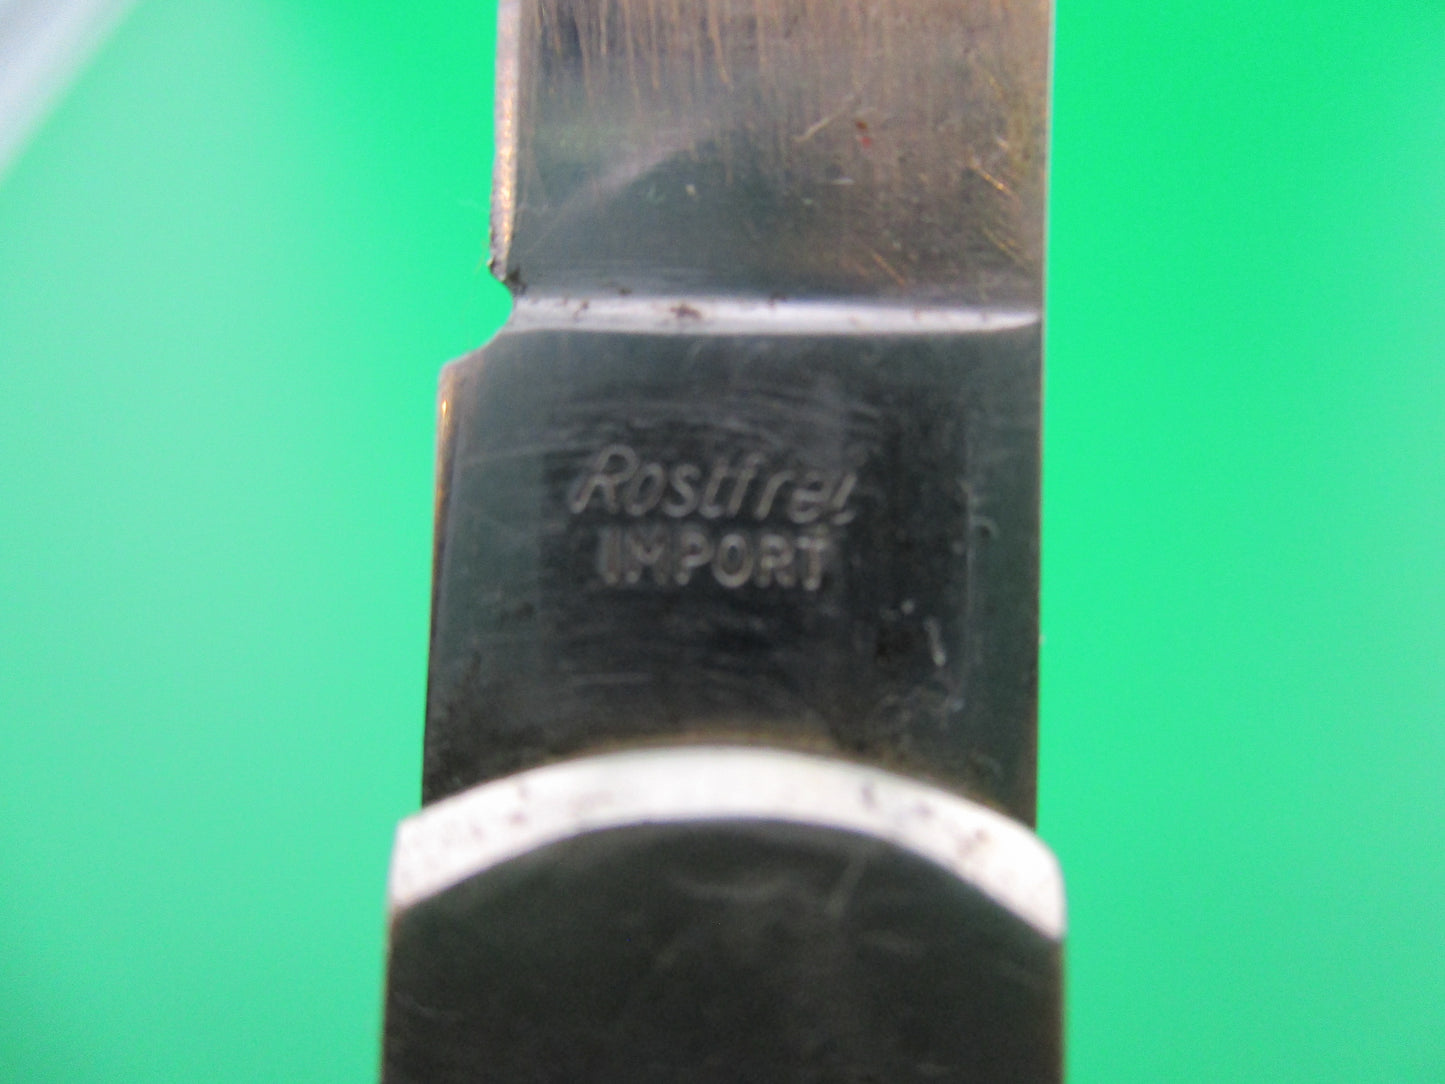 German 11cm Rostfrei Slimline Imitation Stag lever knife